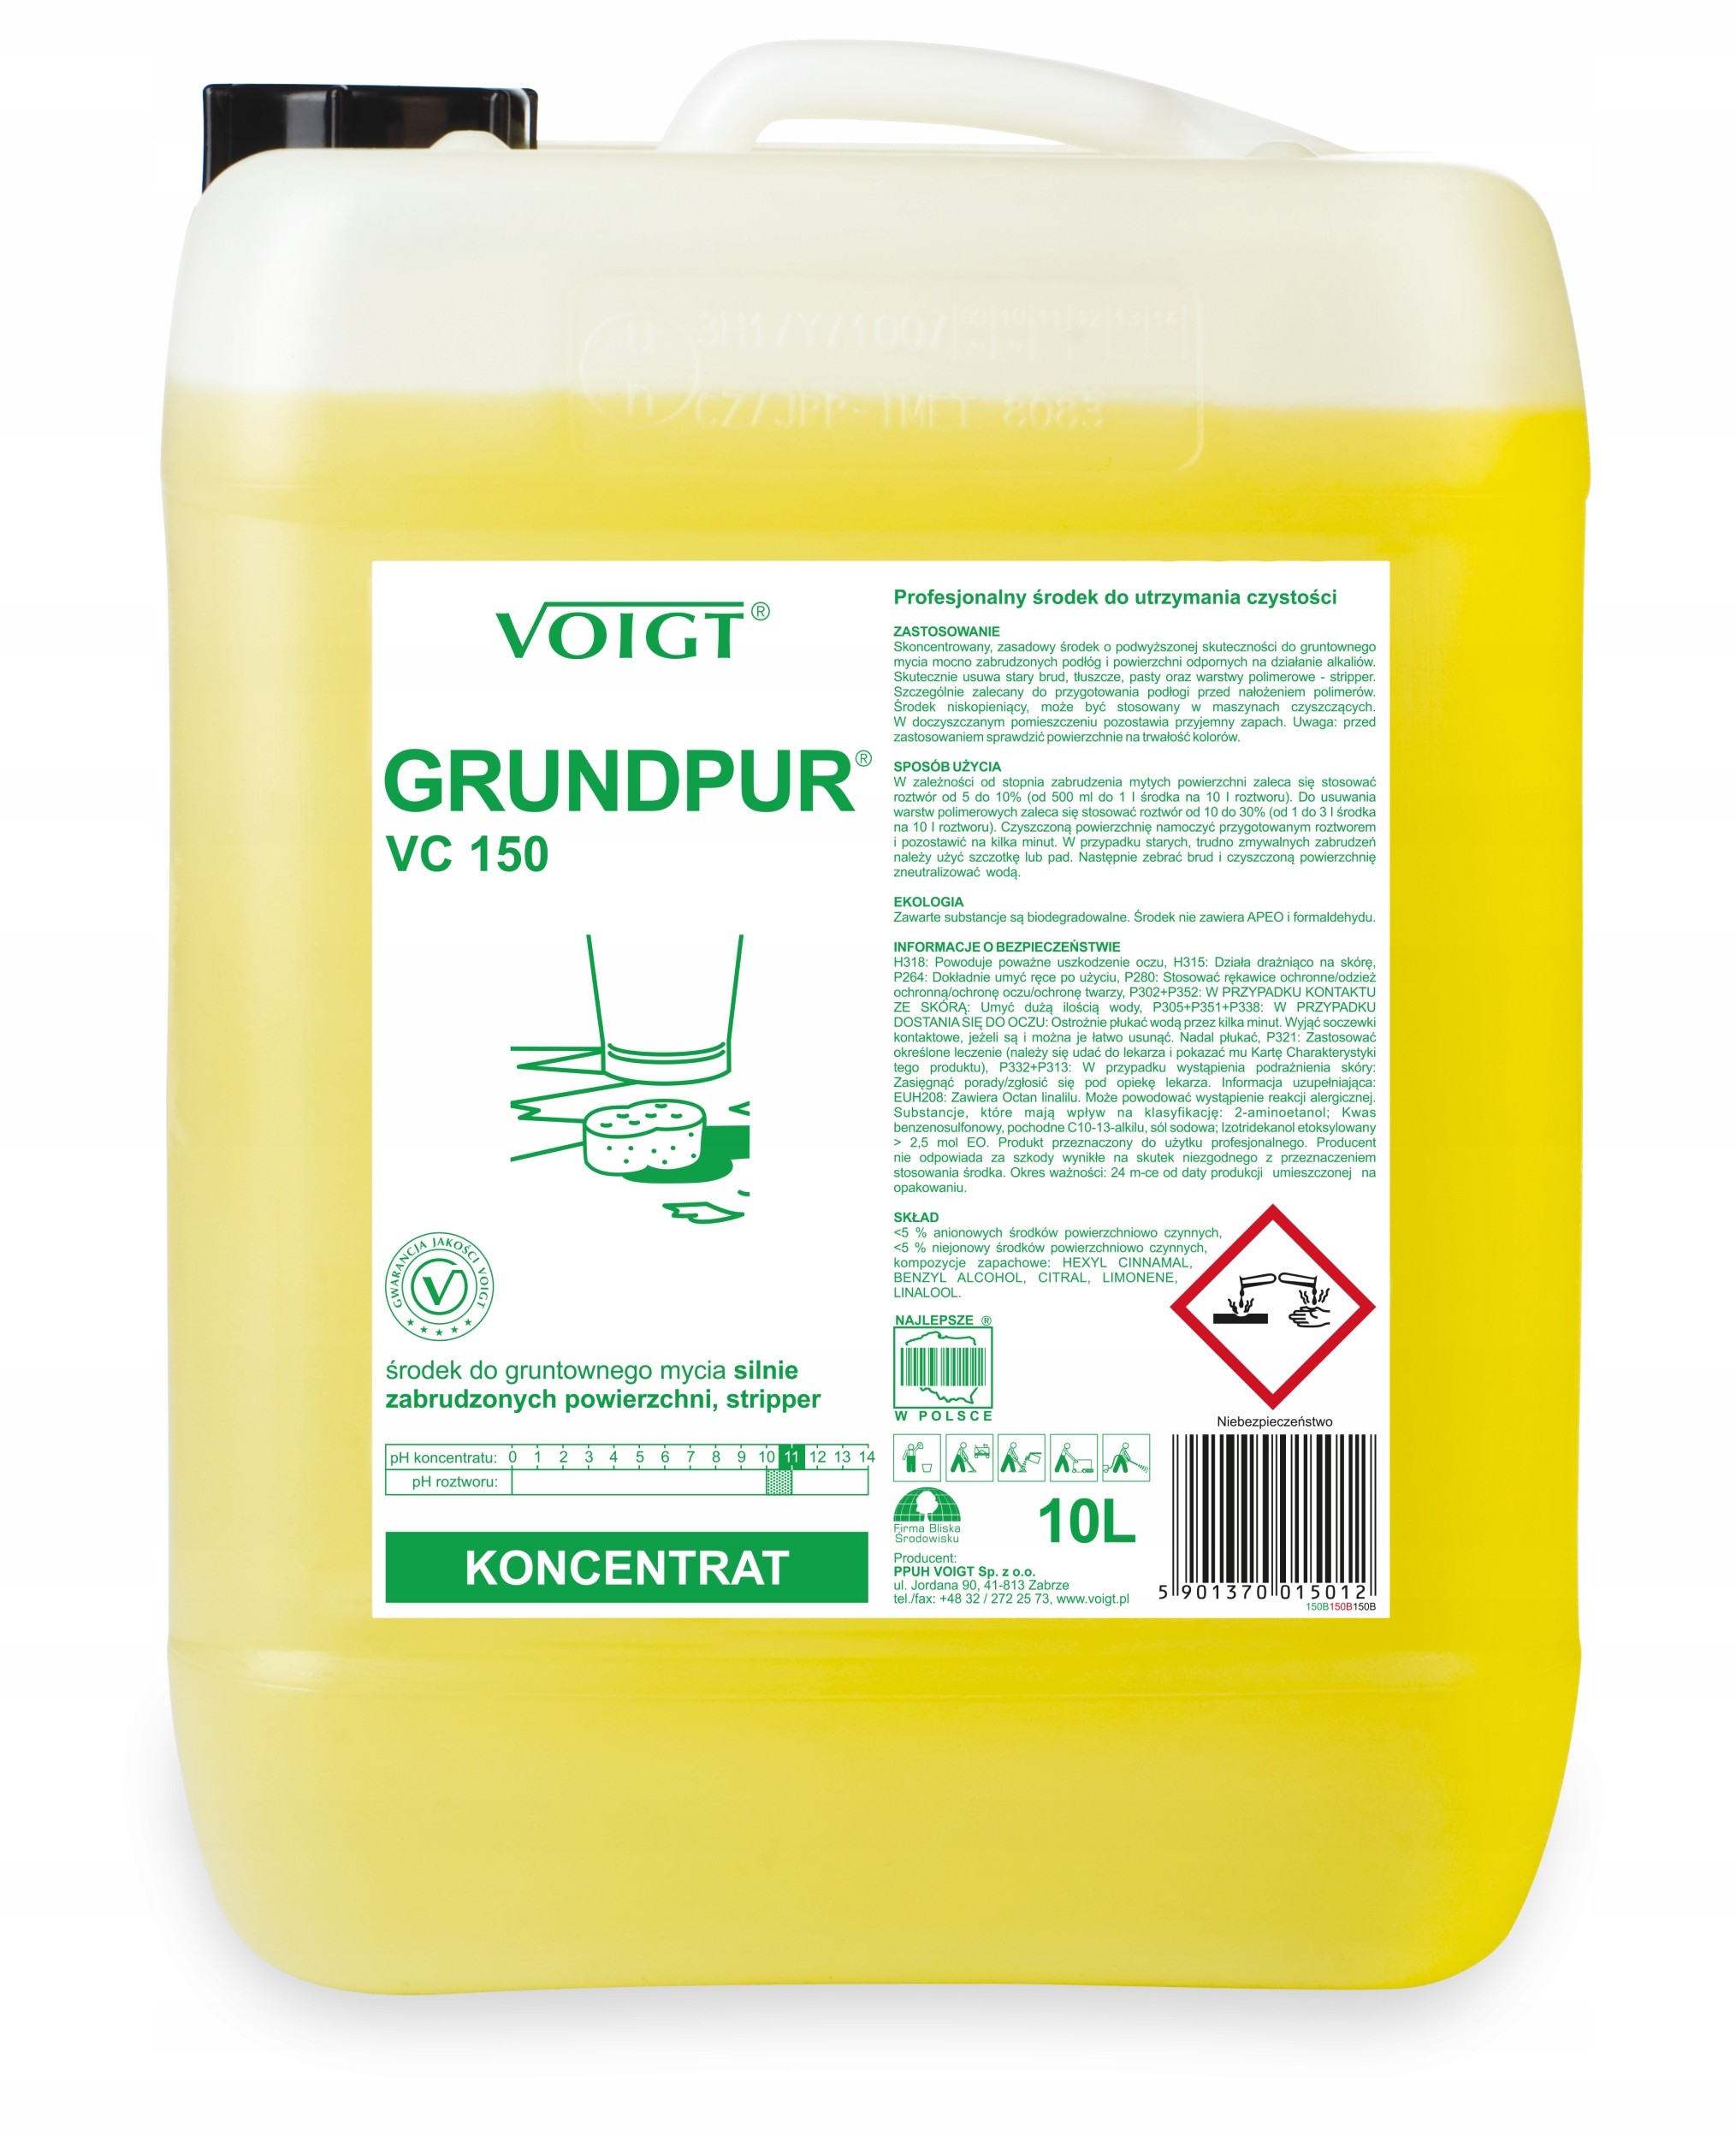 Voigt Grundpur VC150 płyn do gruntownego mycia 10L